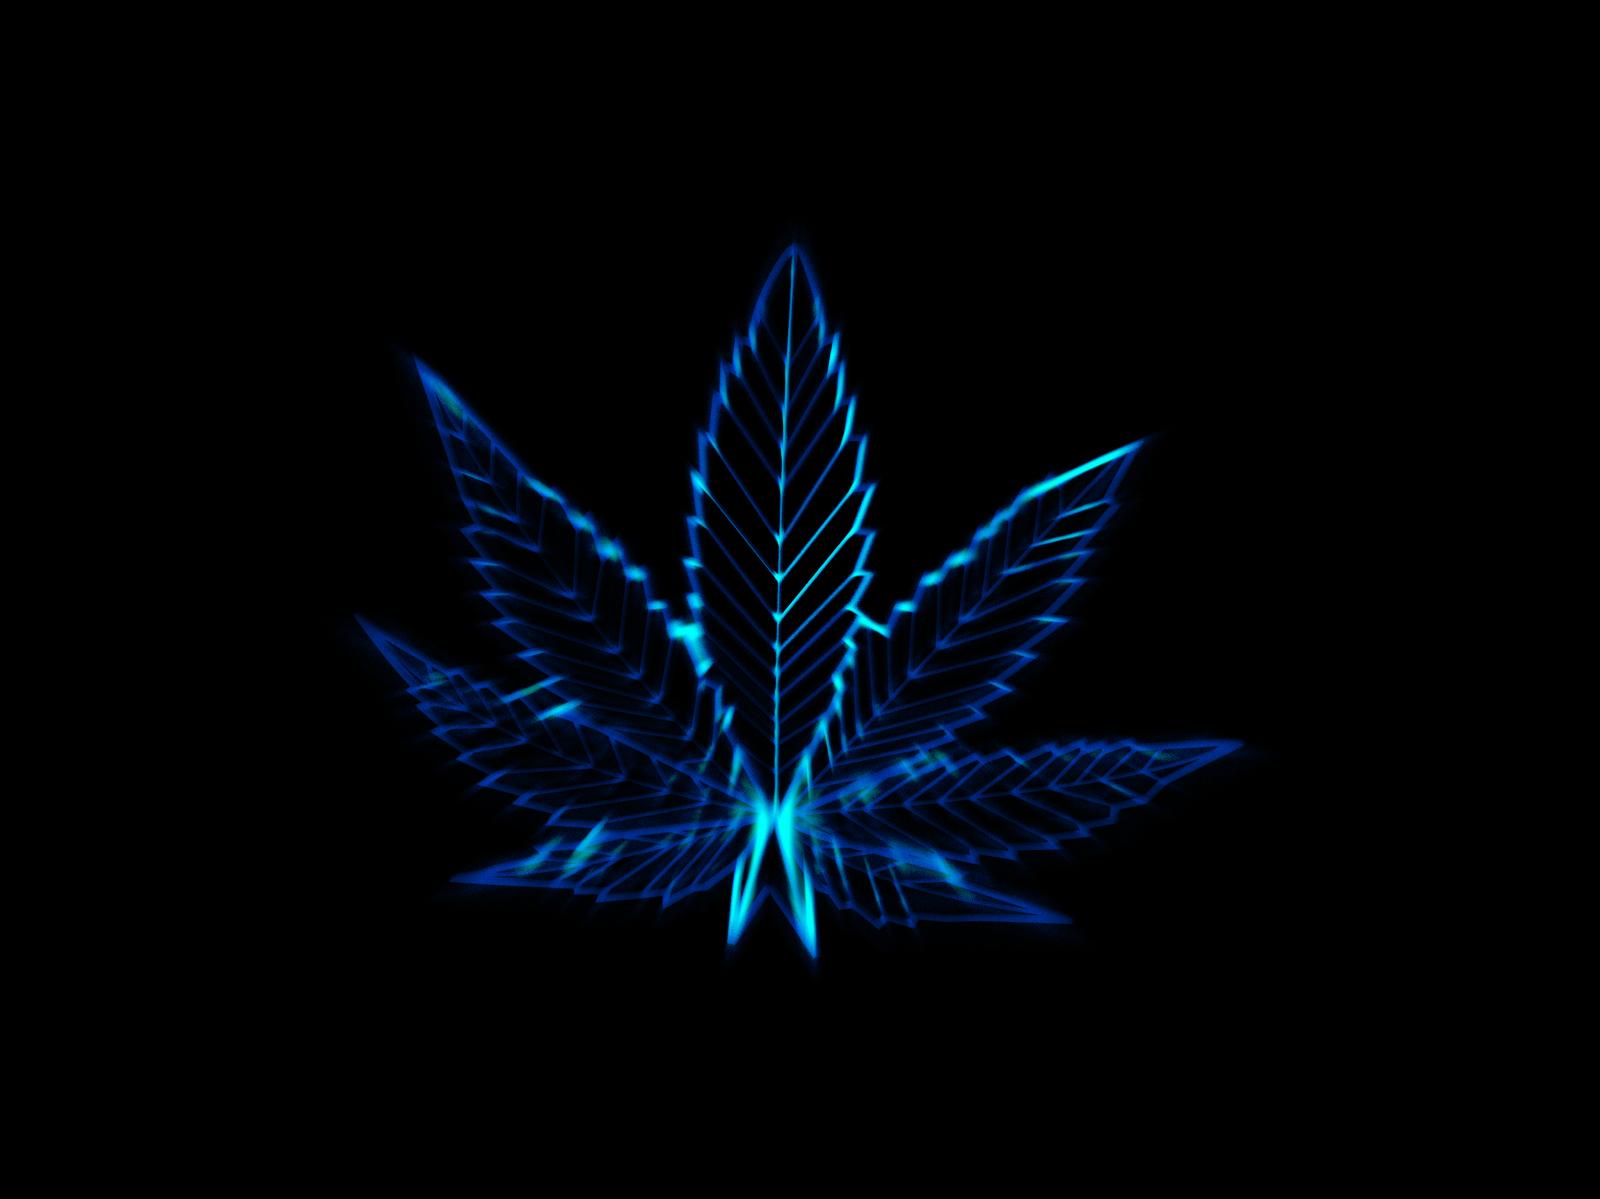 Marijuana Leaf Wallpaper